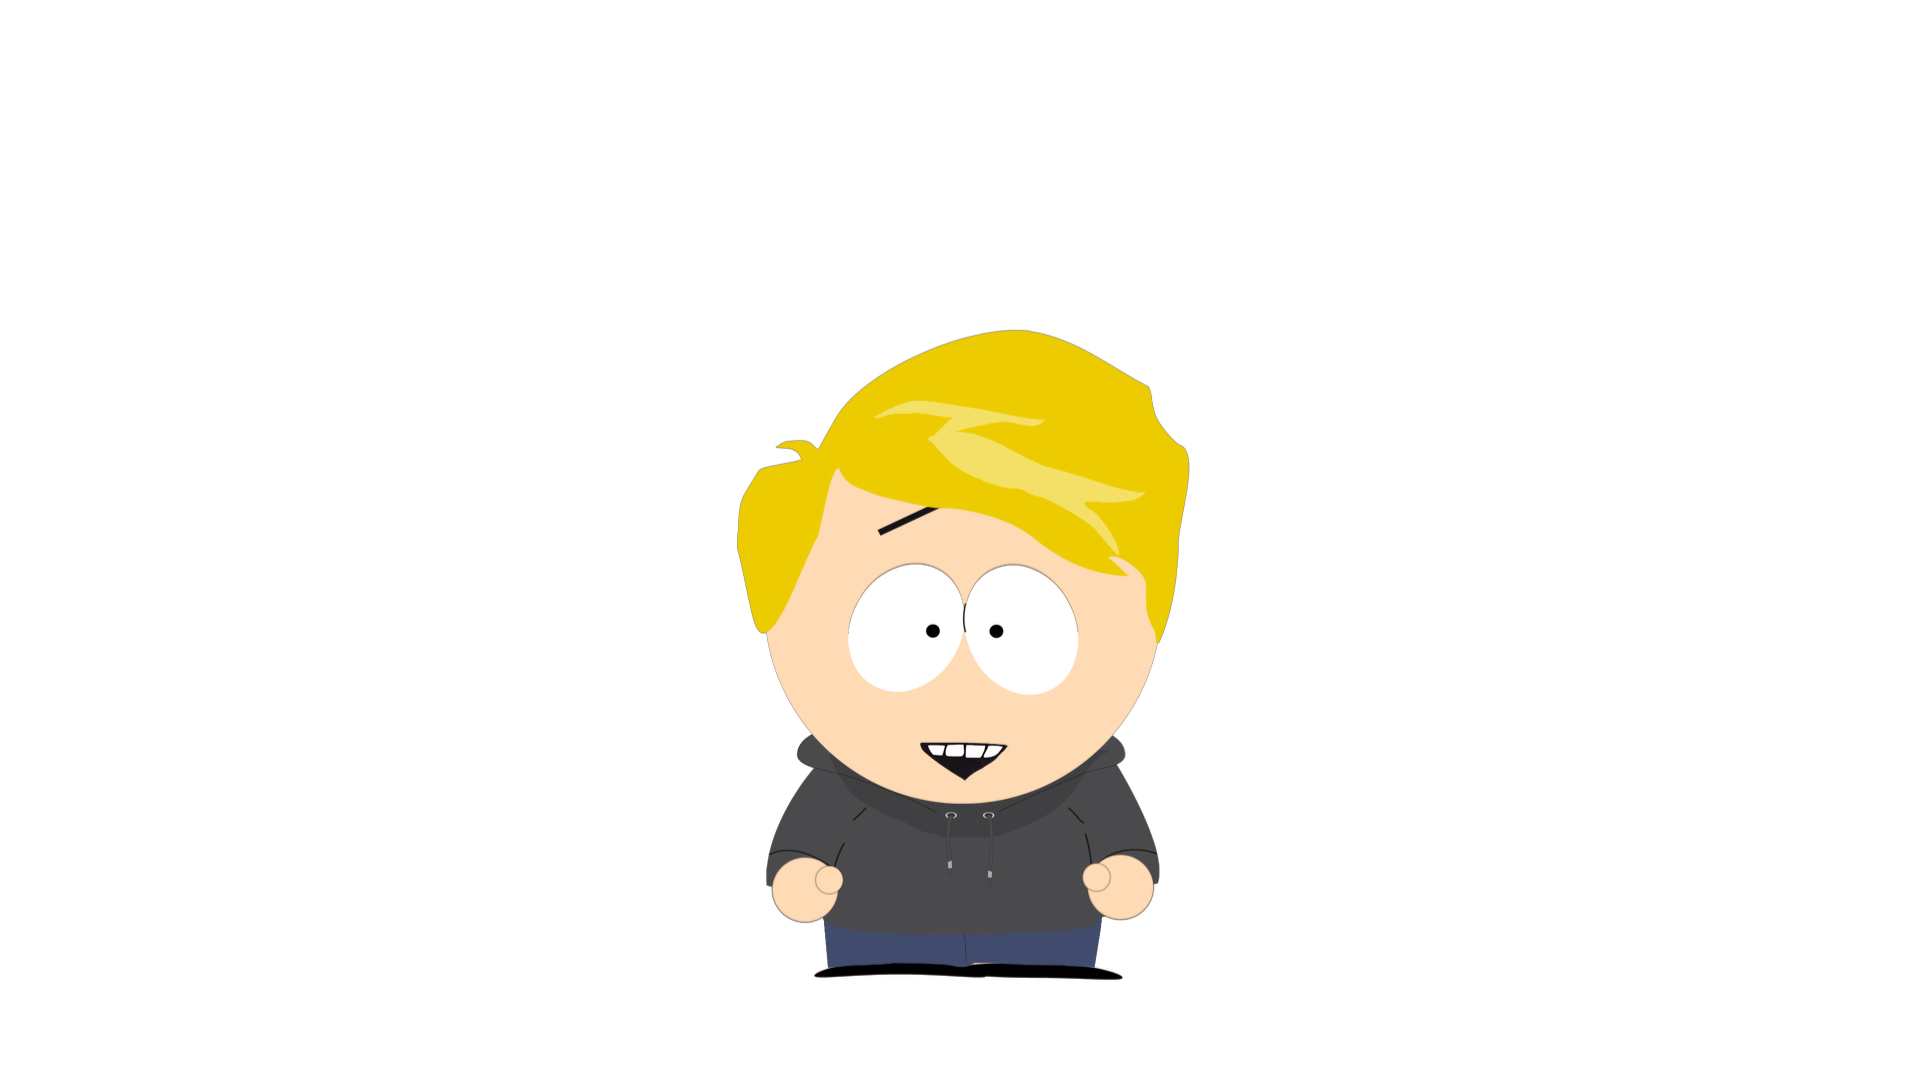 moj avatar wzorowany na postaci z serialu South Park